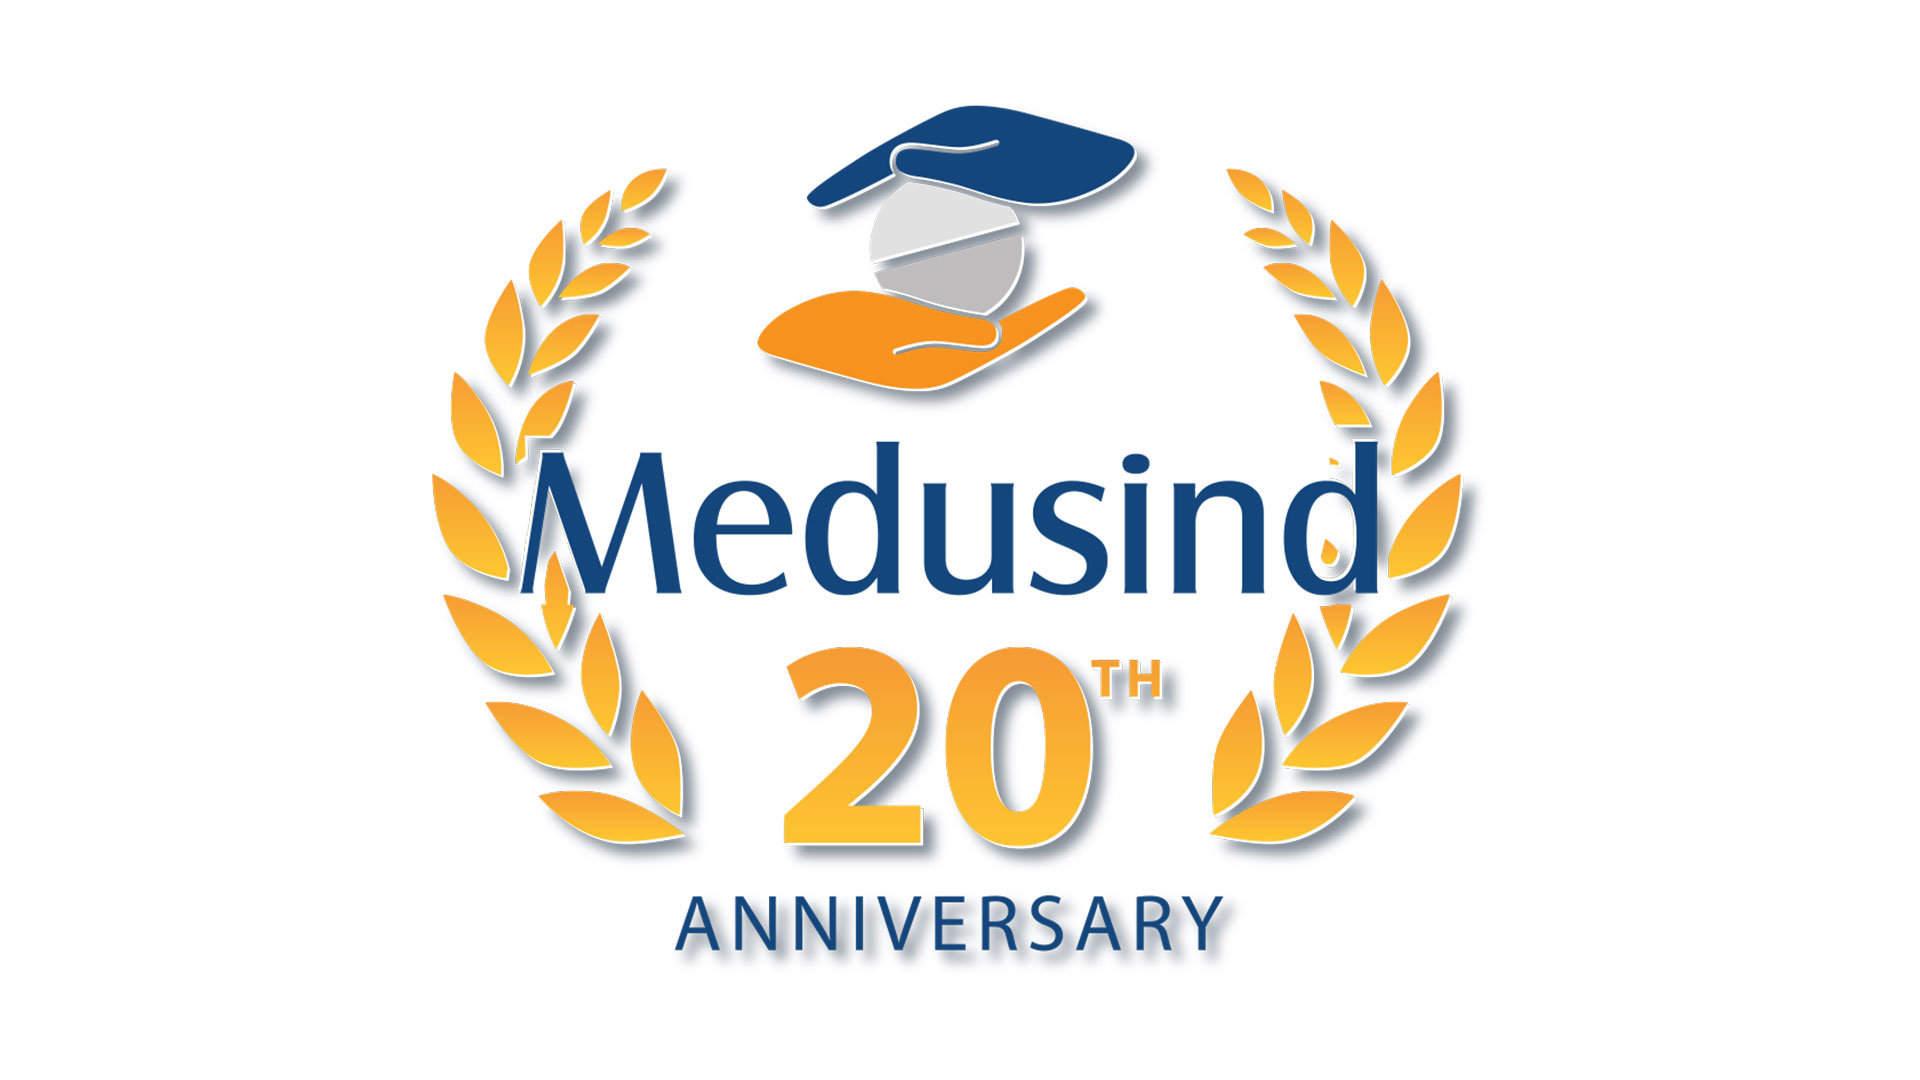 Medusind 20th Anniversary Logo